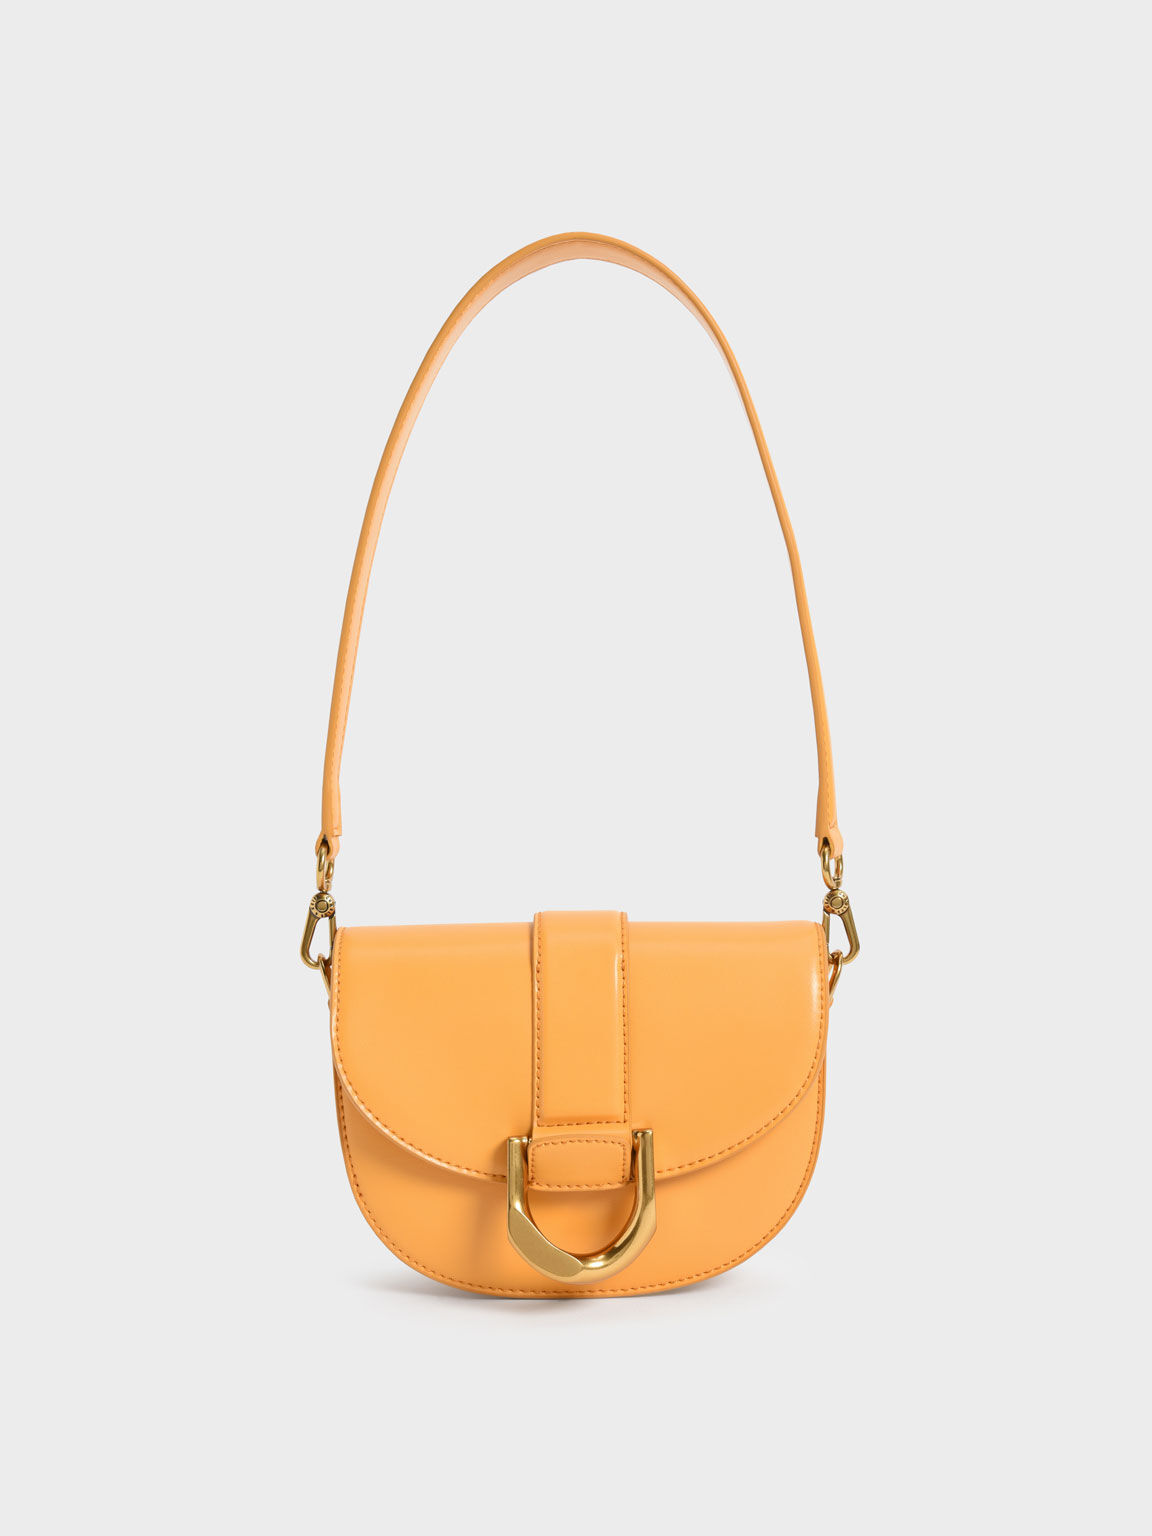 New 2015 mini Charles Keith bags handbag women famous brands